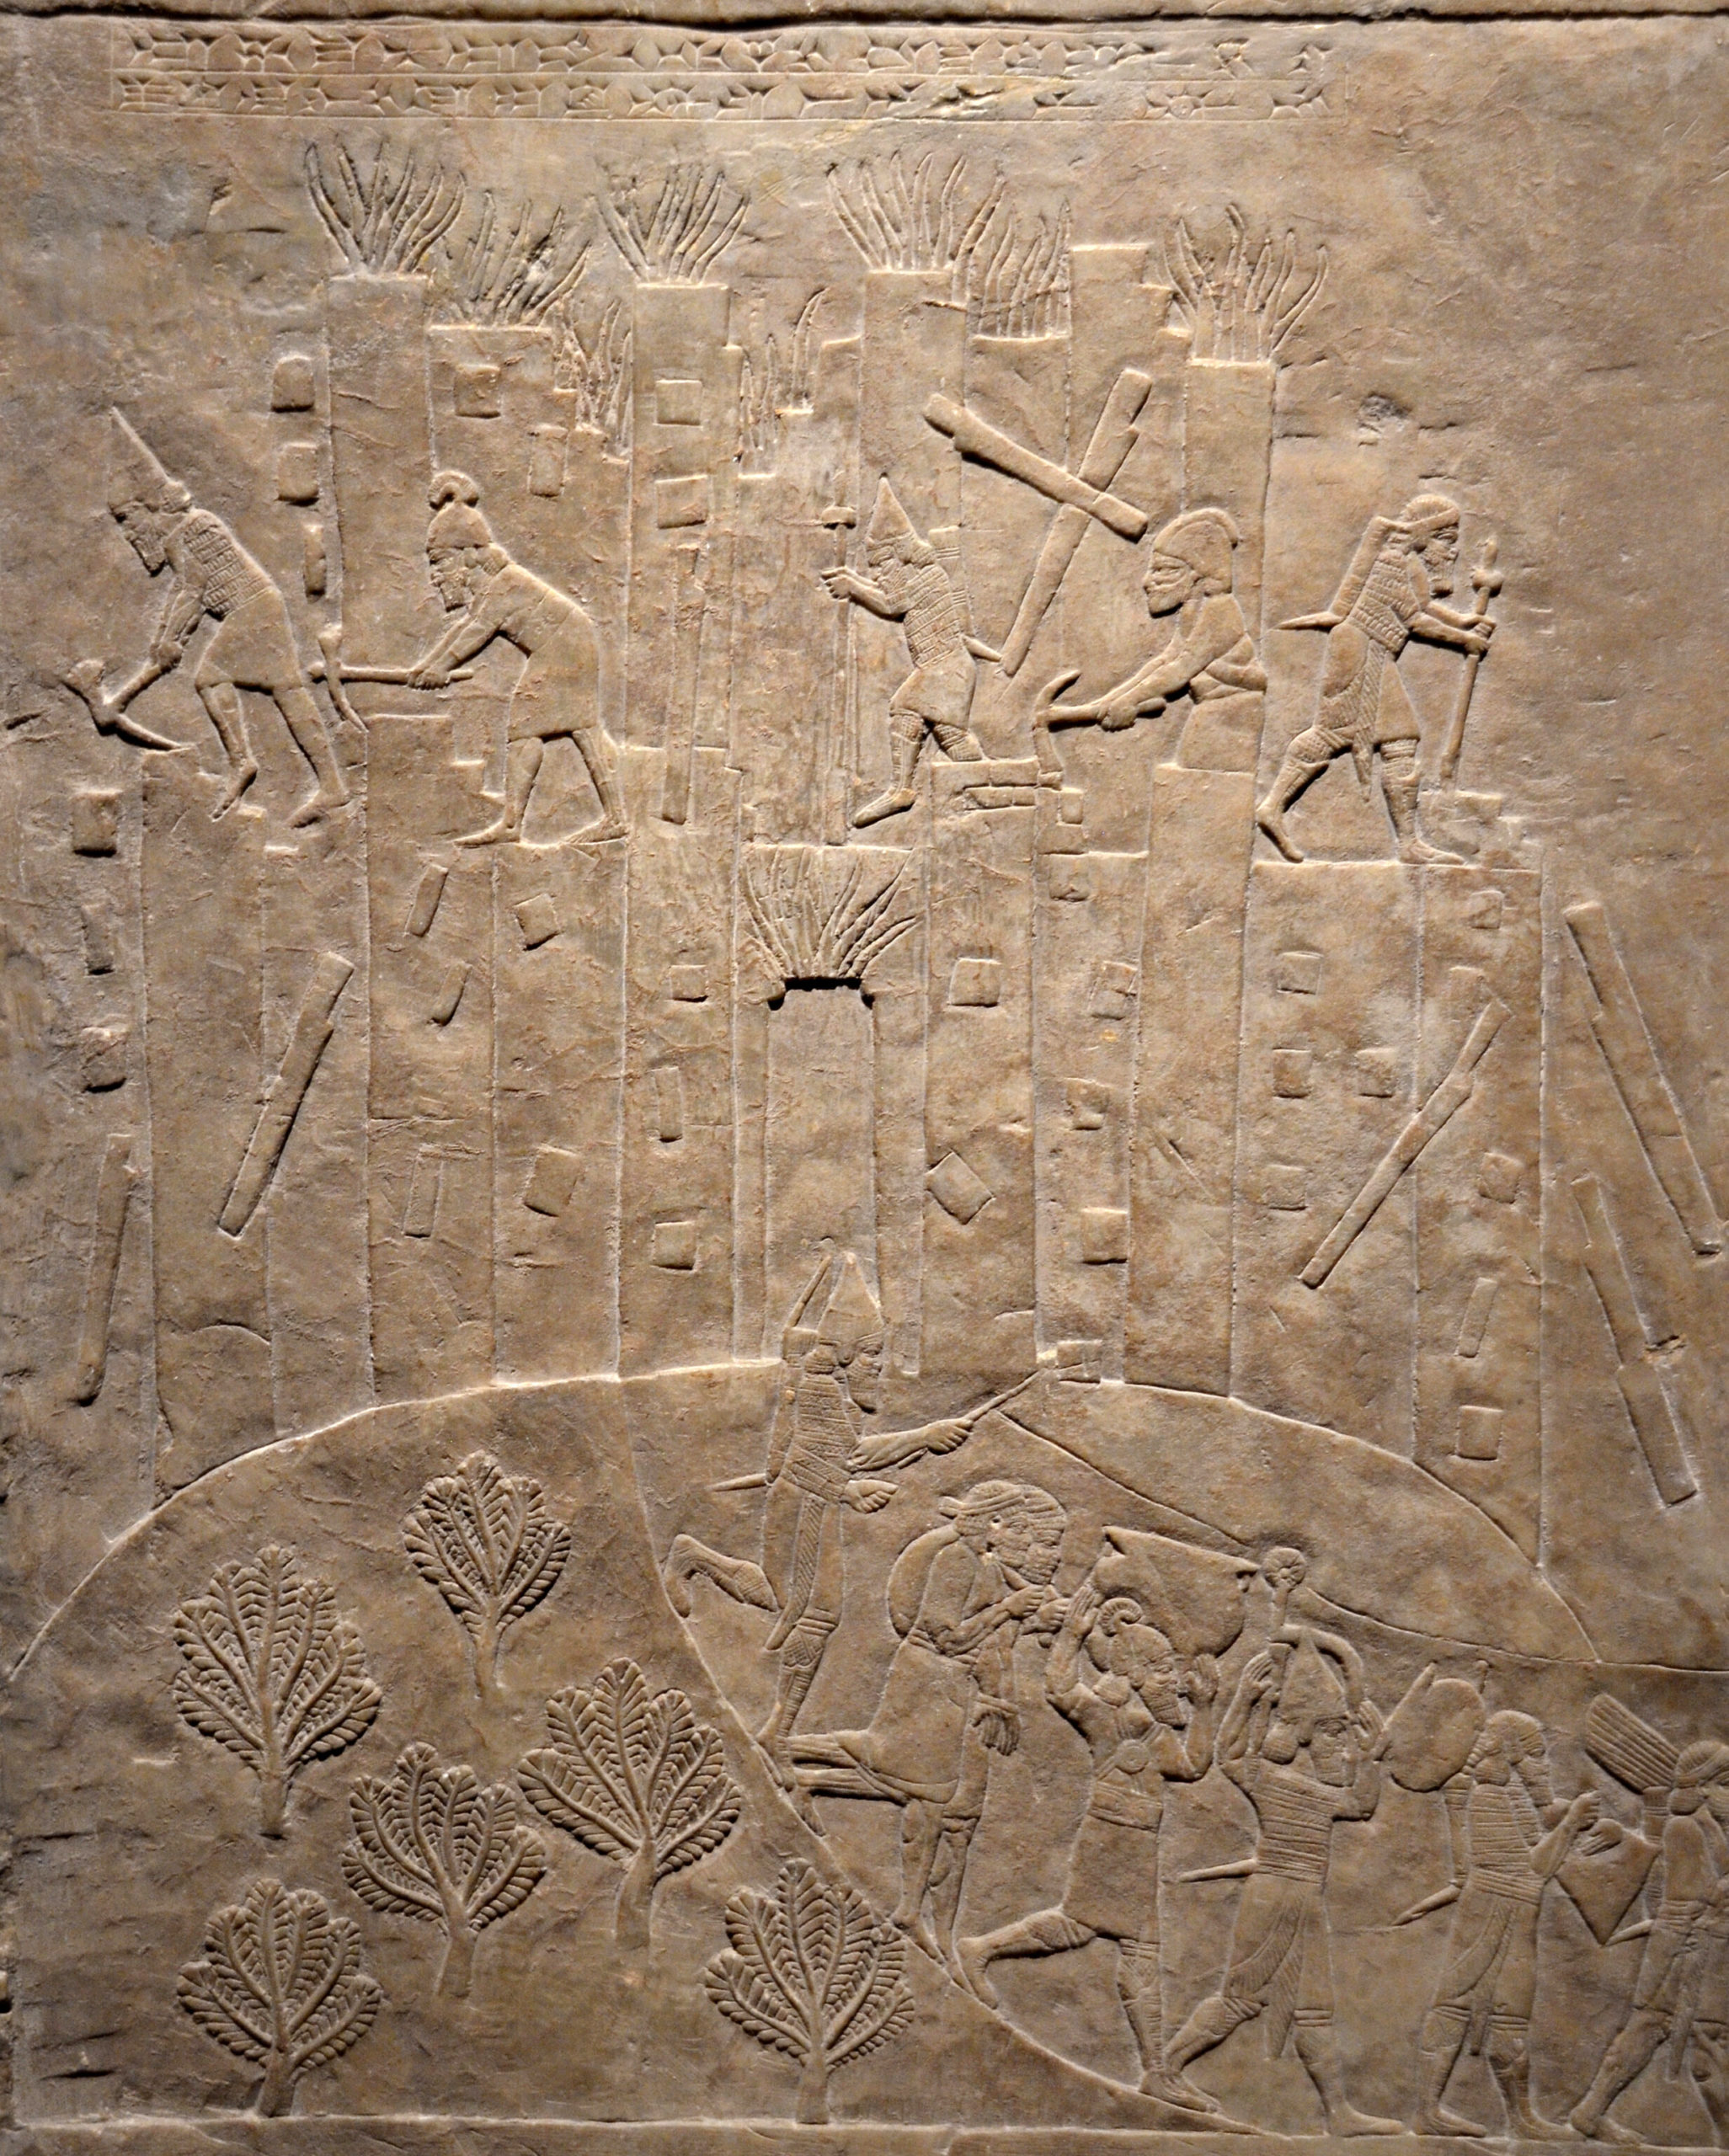 Sacking of Susa by Ashurbanipal, North Palace, Nineveh, 647 B.C.E. (British Museum; photo: Carole Raddato, CC BY-SA 2.0)